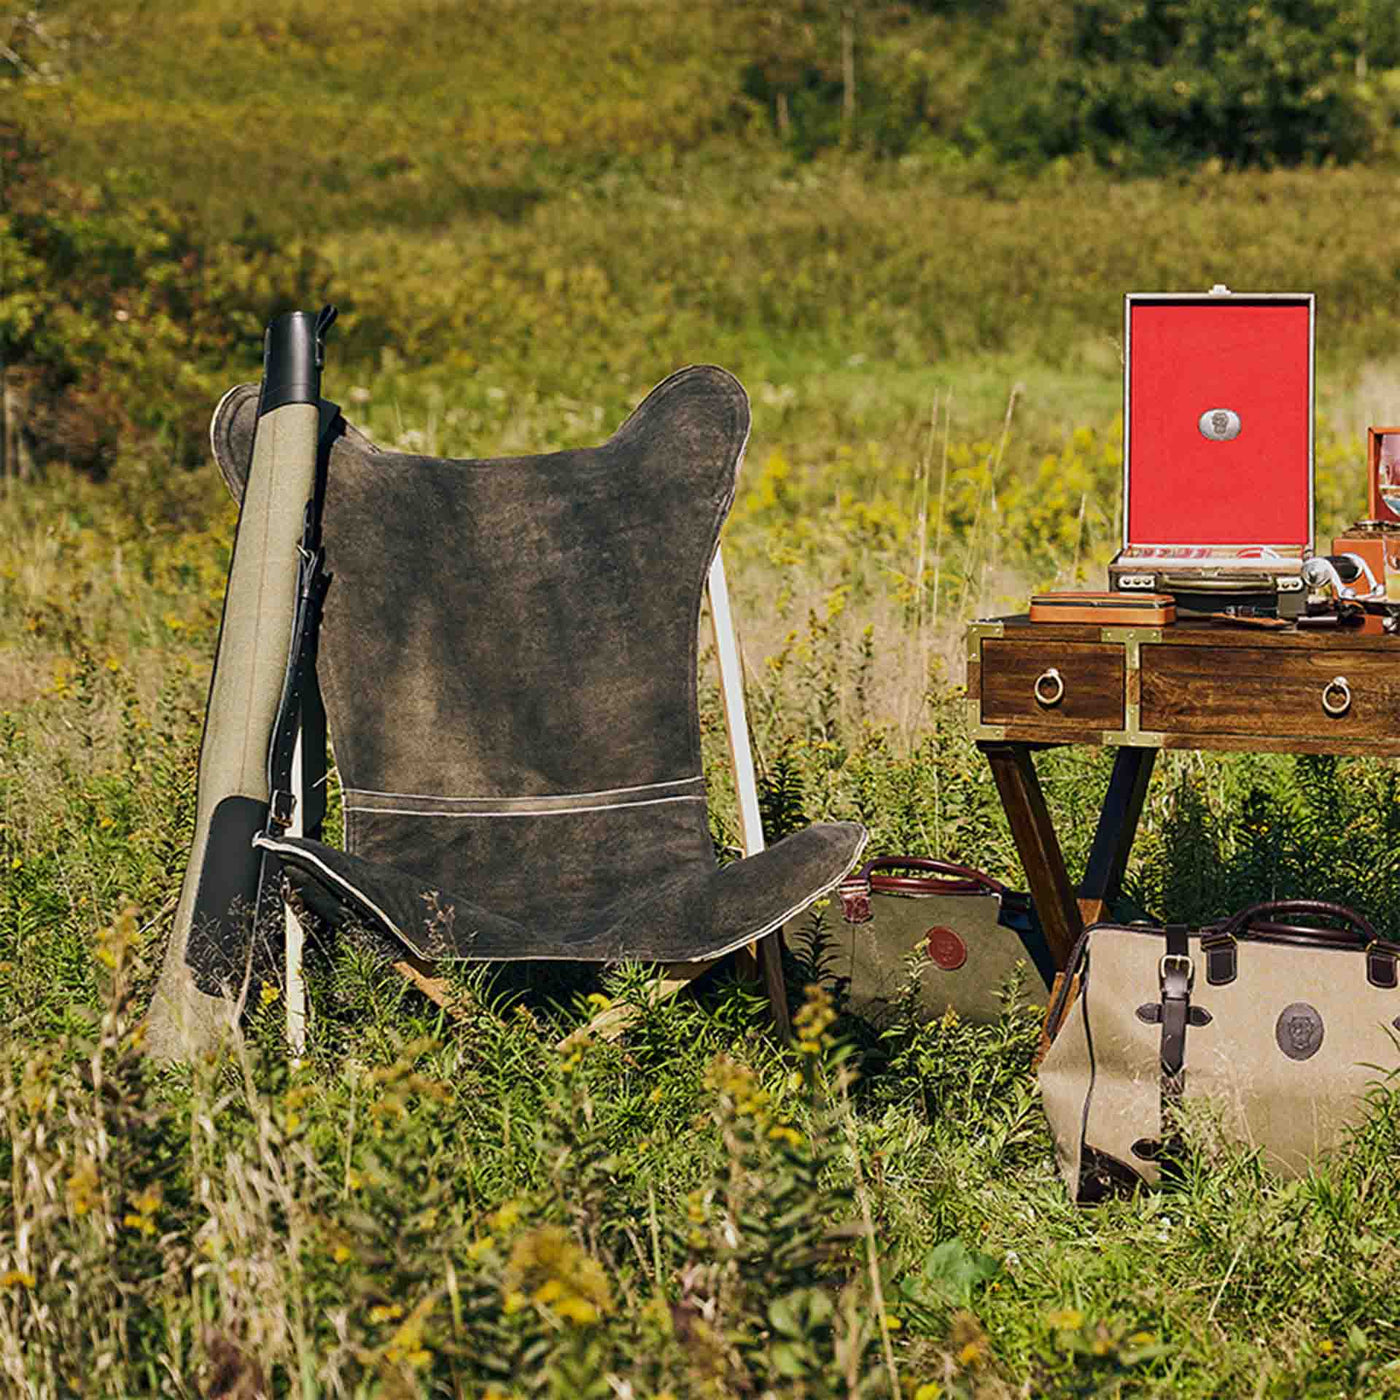 Deerskin Safari Chair - Maple